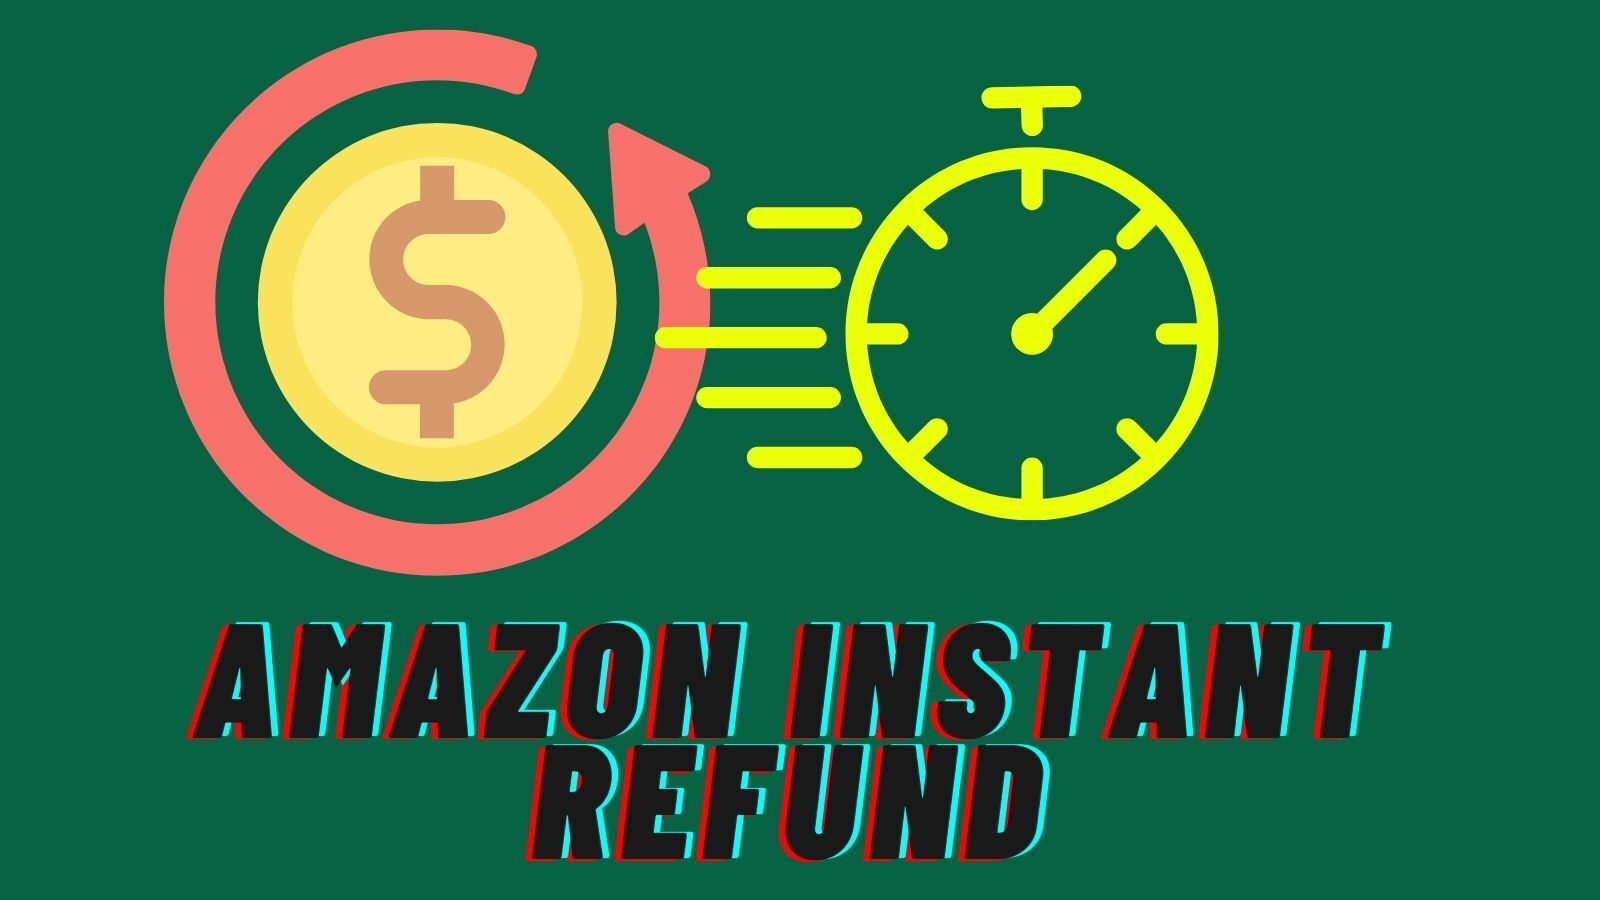 Amazon Instant Refund (How to Get It?)